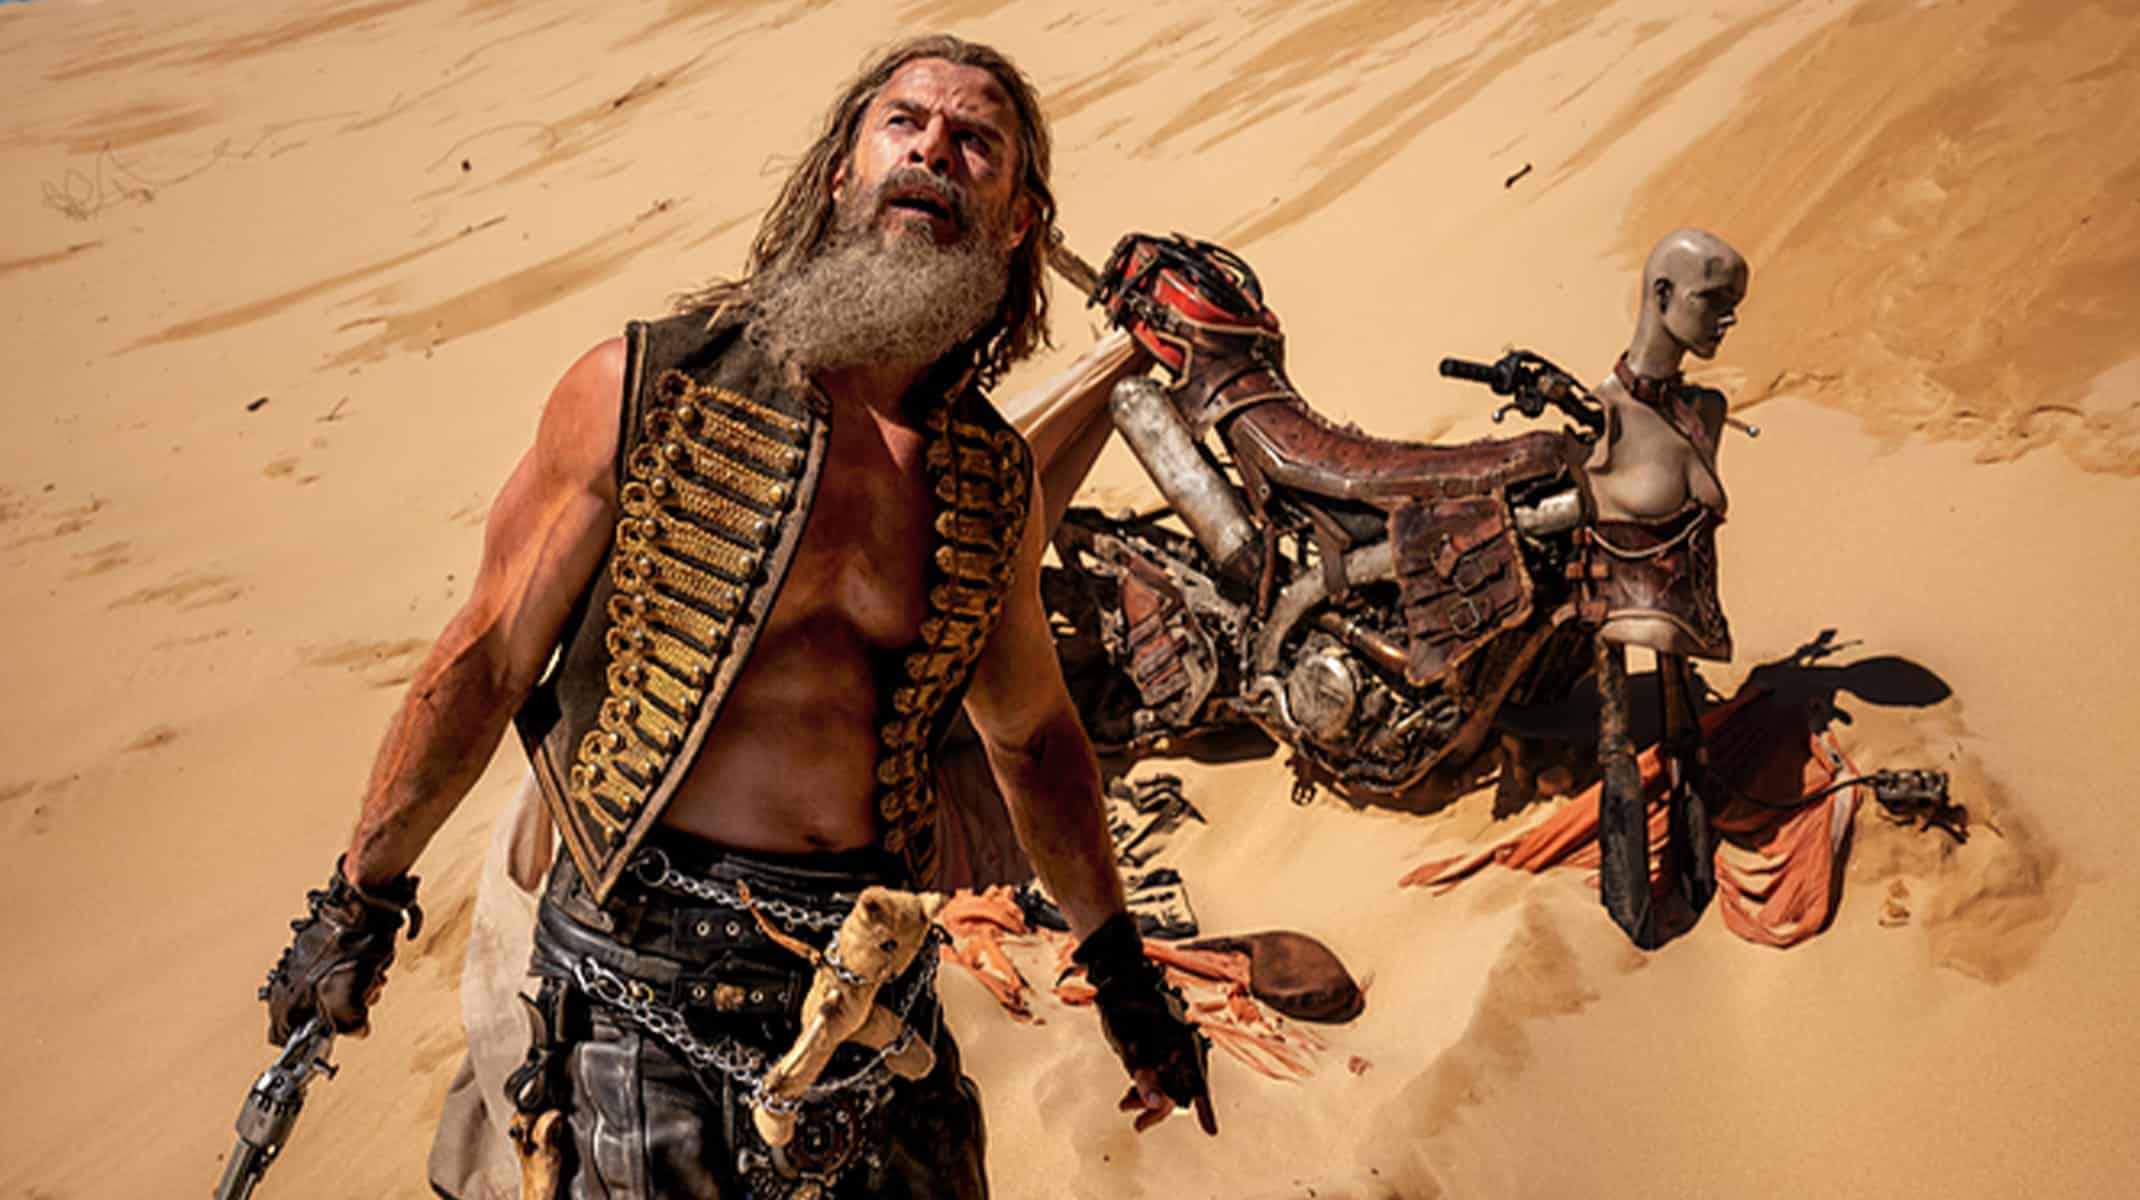 Chris Hemsworth in Furiosa: A Mad Max Saga.